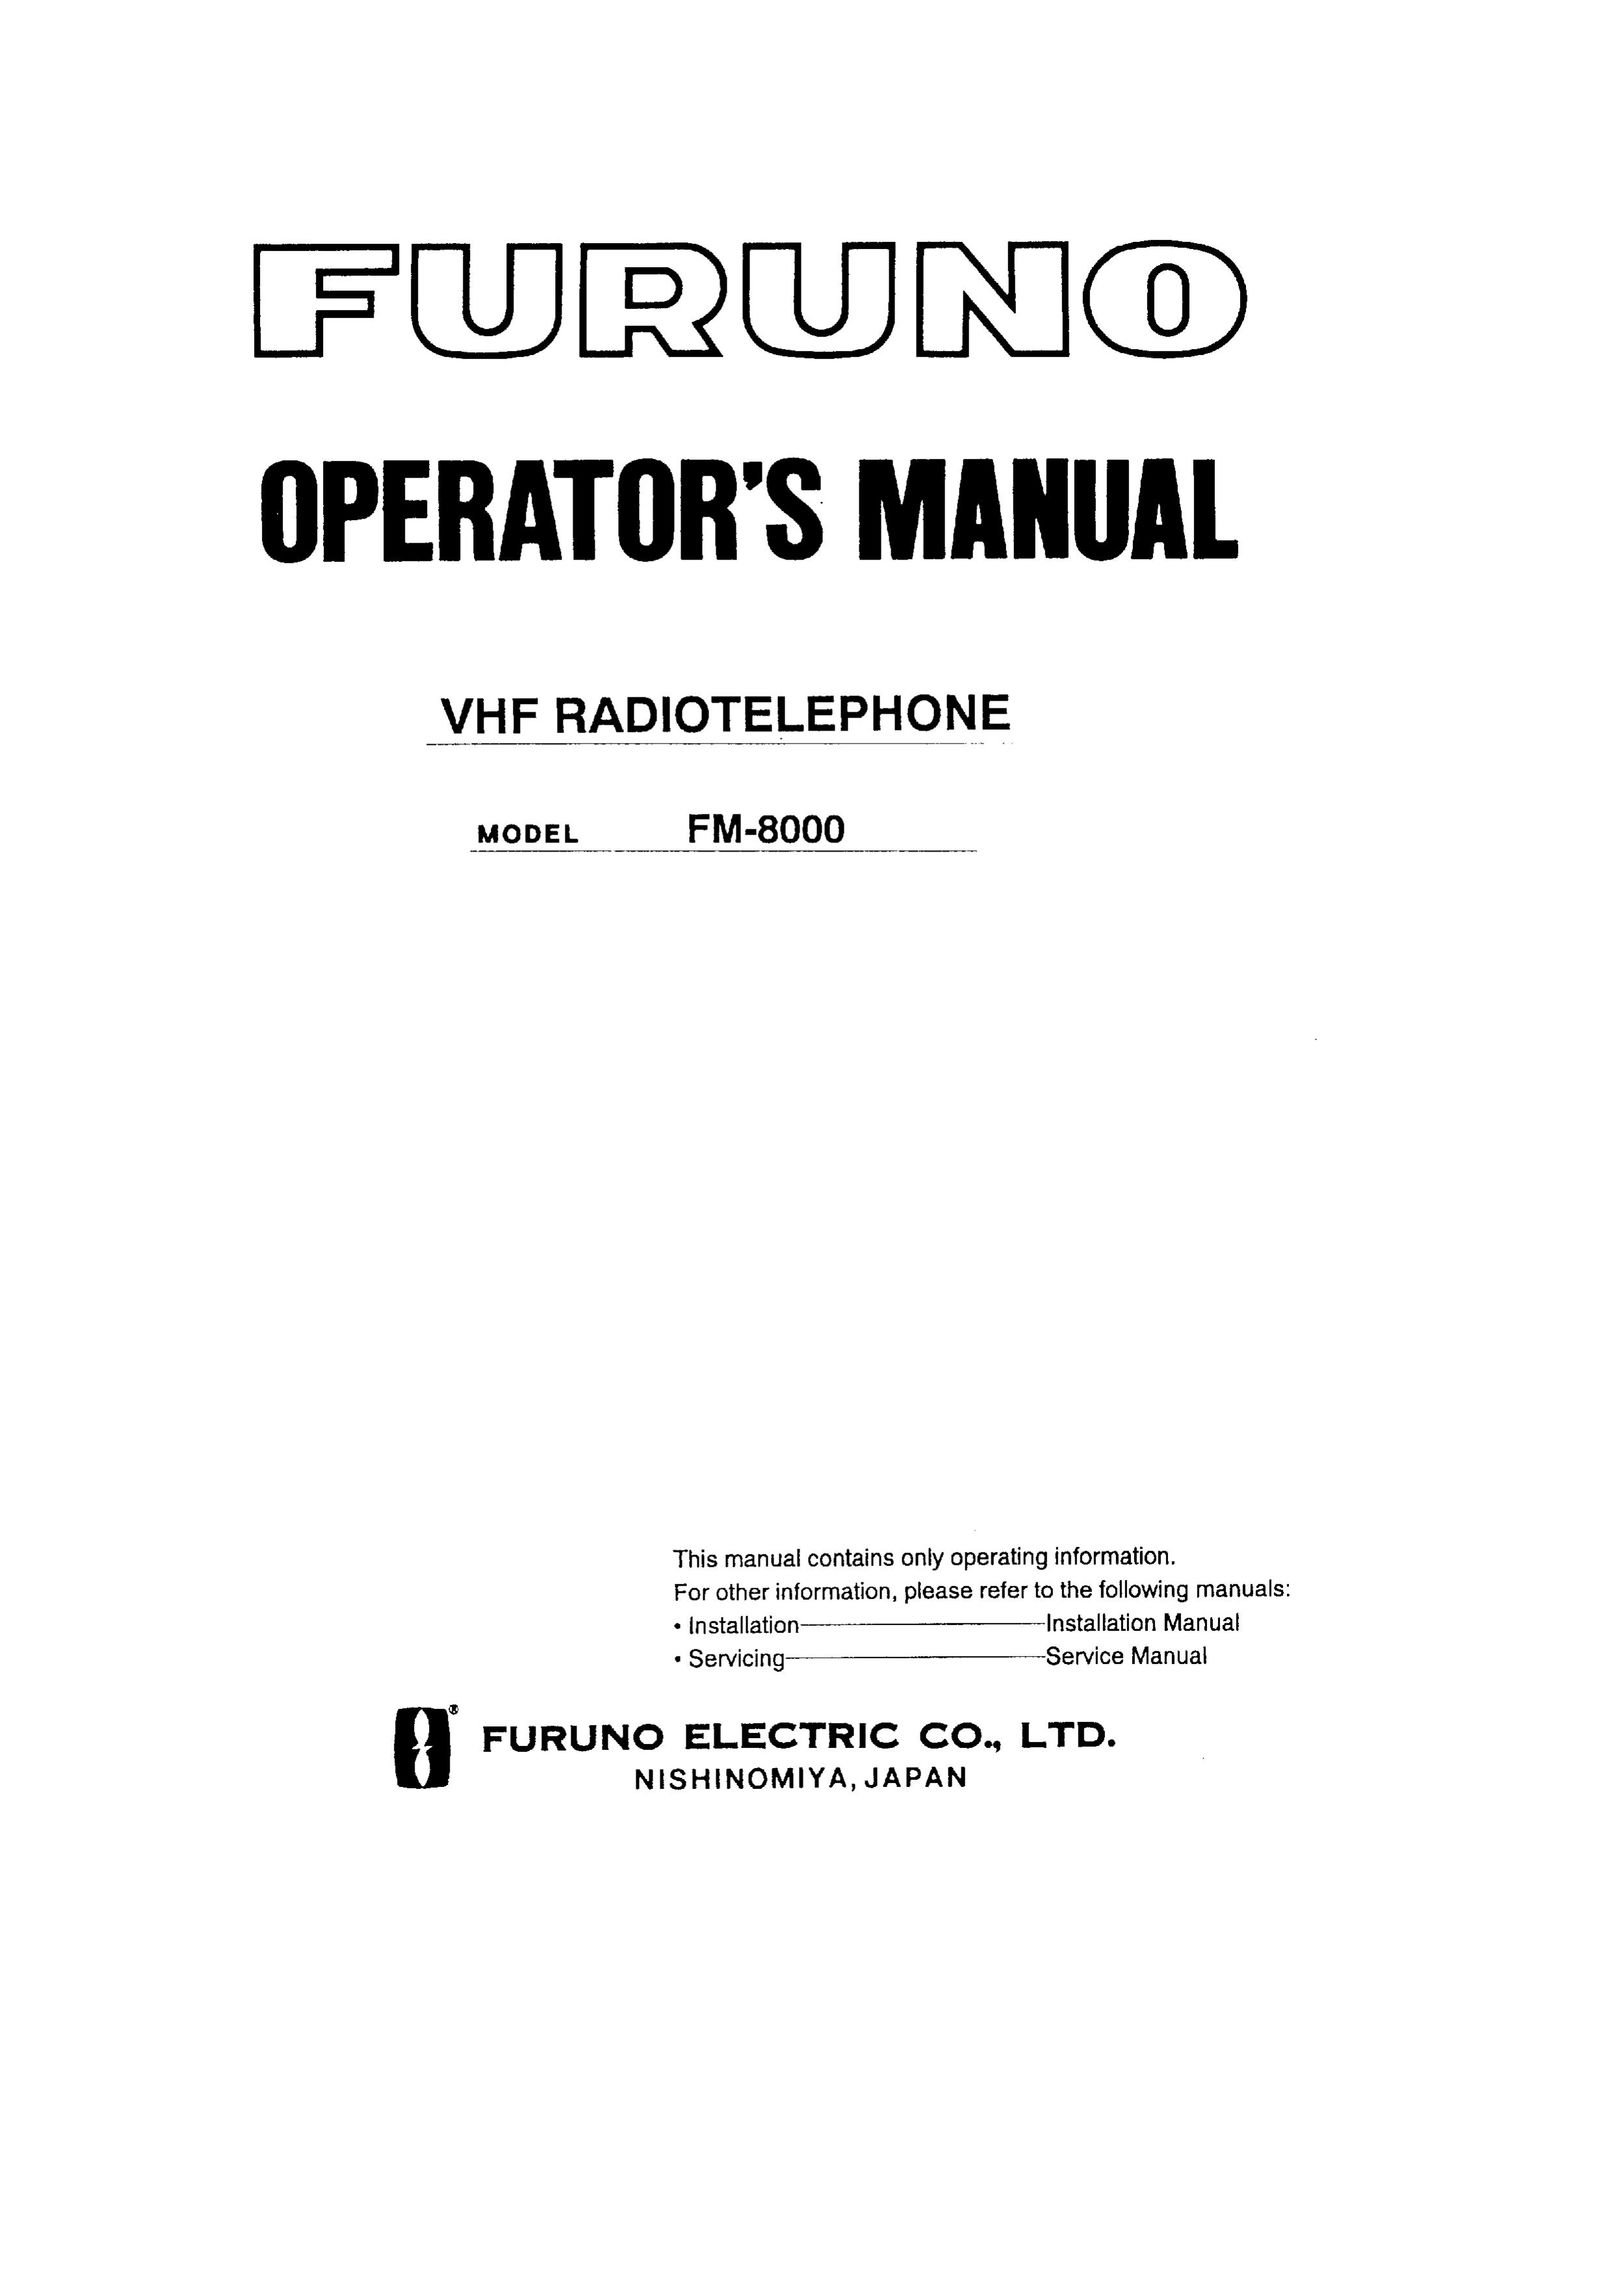 Furuno FM-8000 Telephone User Manual